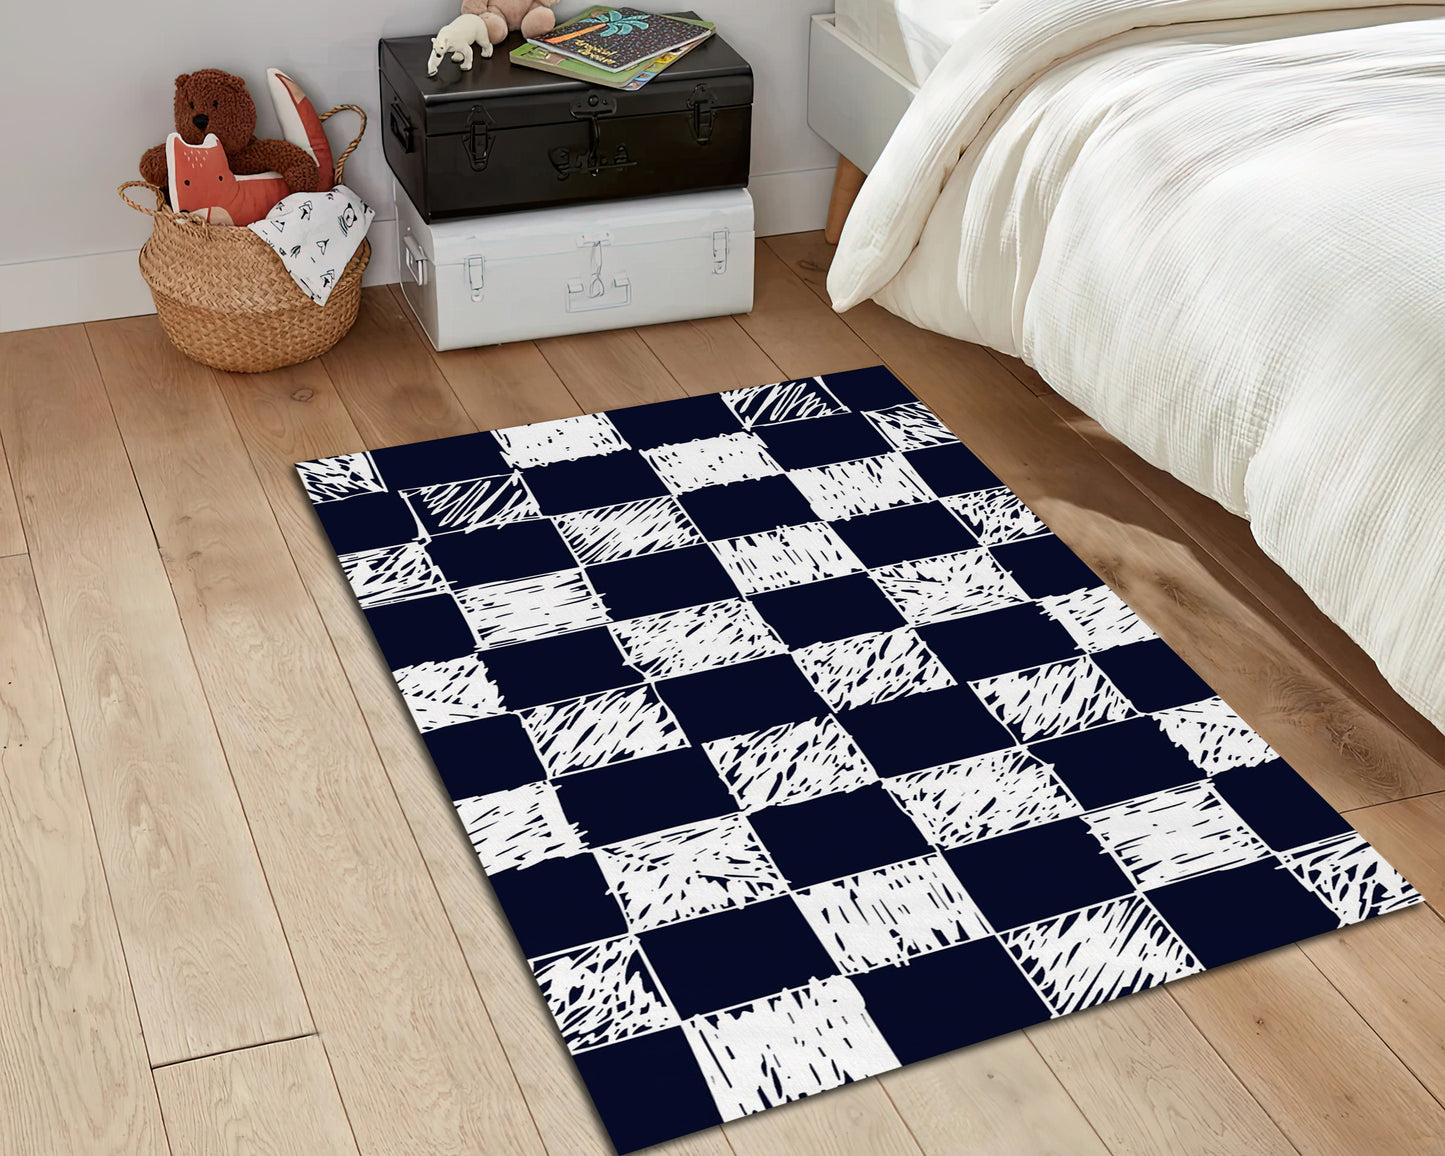 Vintage Checkered Rug, 3D Illusion Carpet, Black Pencil Art Bedroom Mat, Home Decor